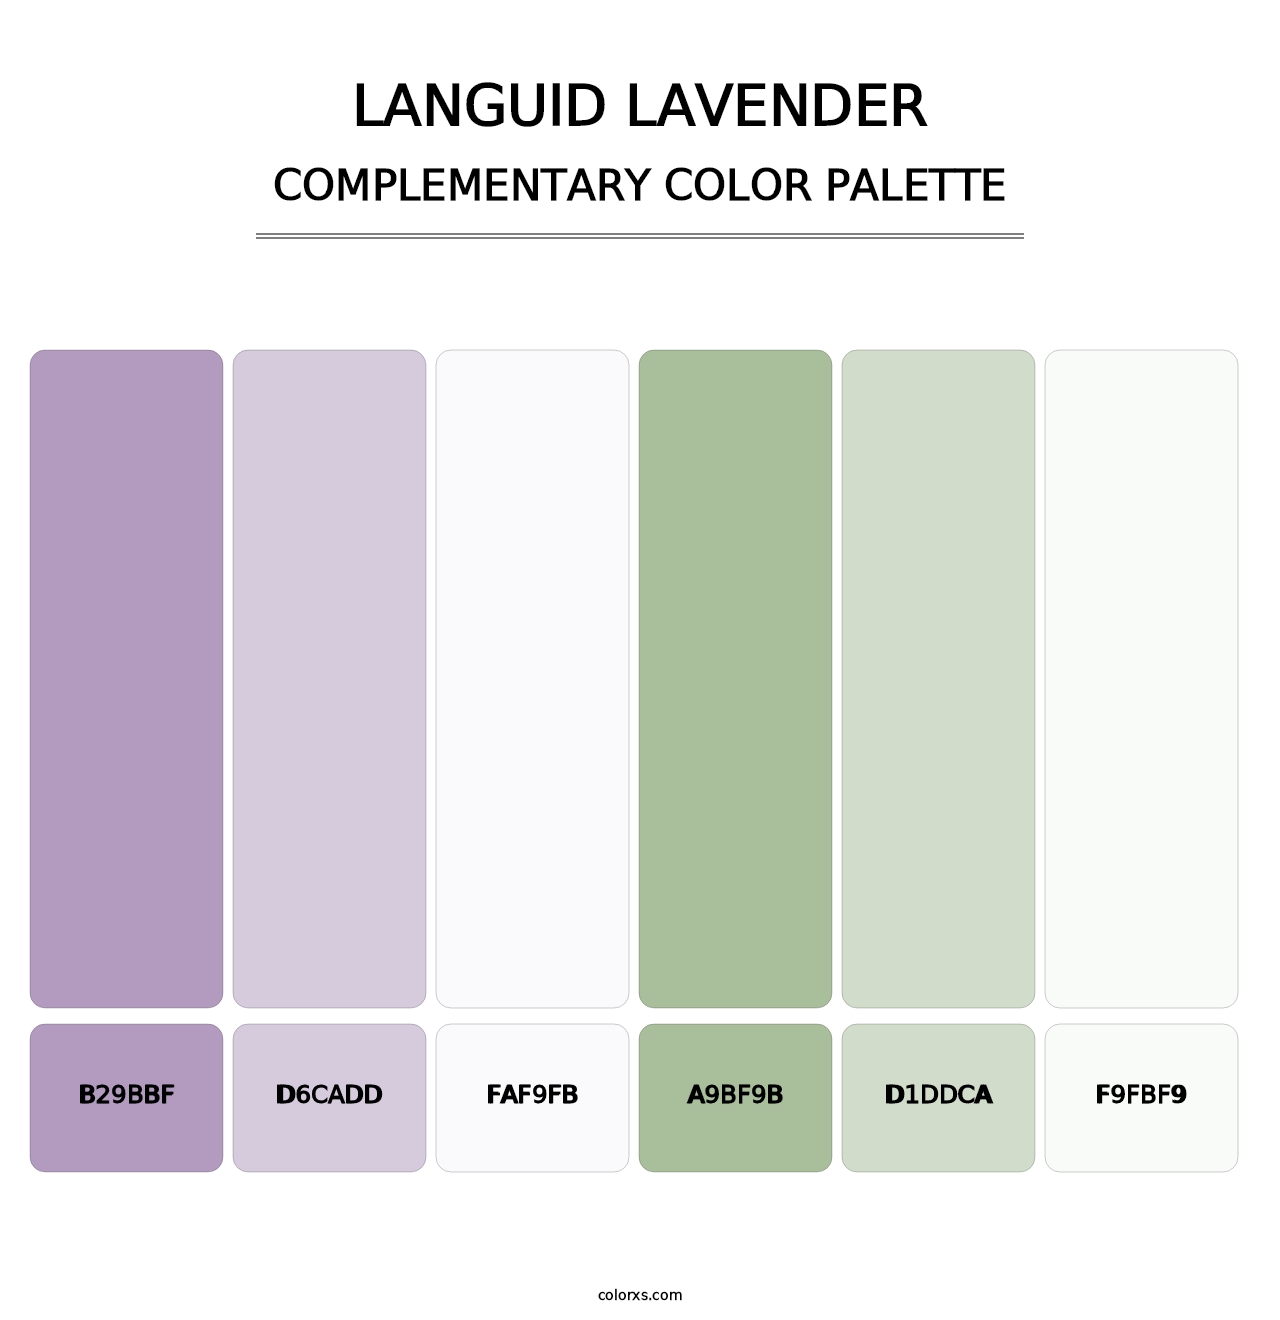 Languid Lavender - Complementary Color Palette